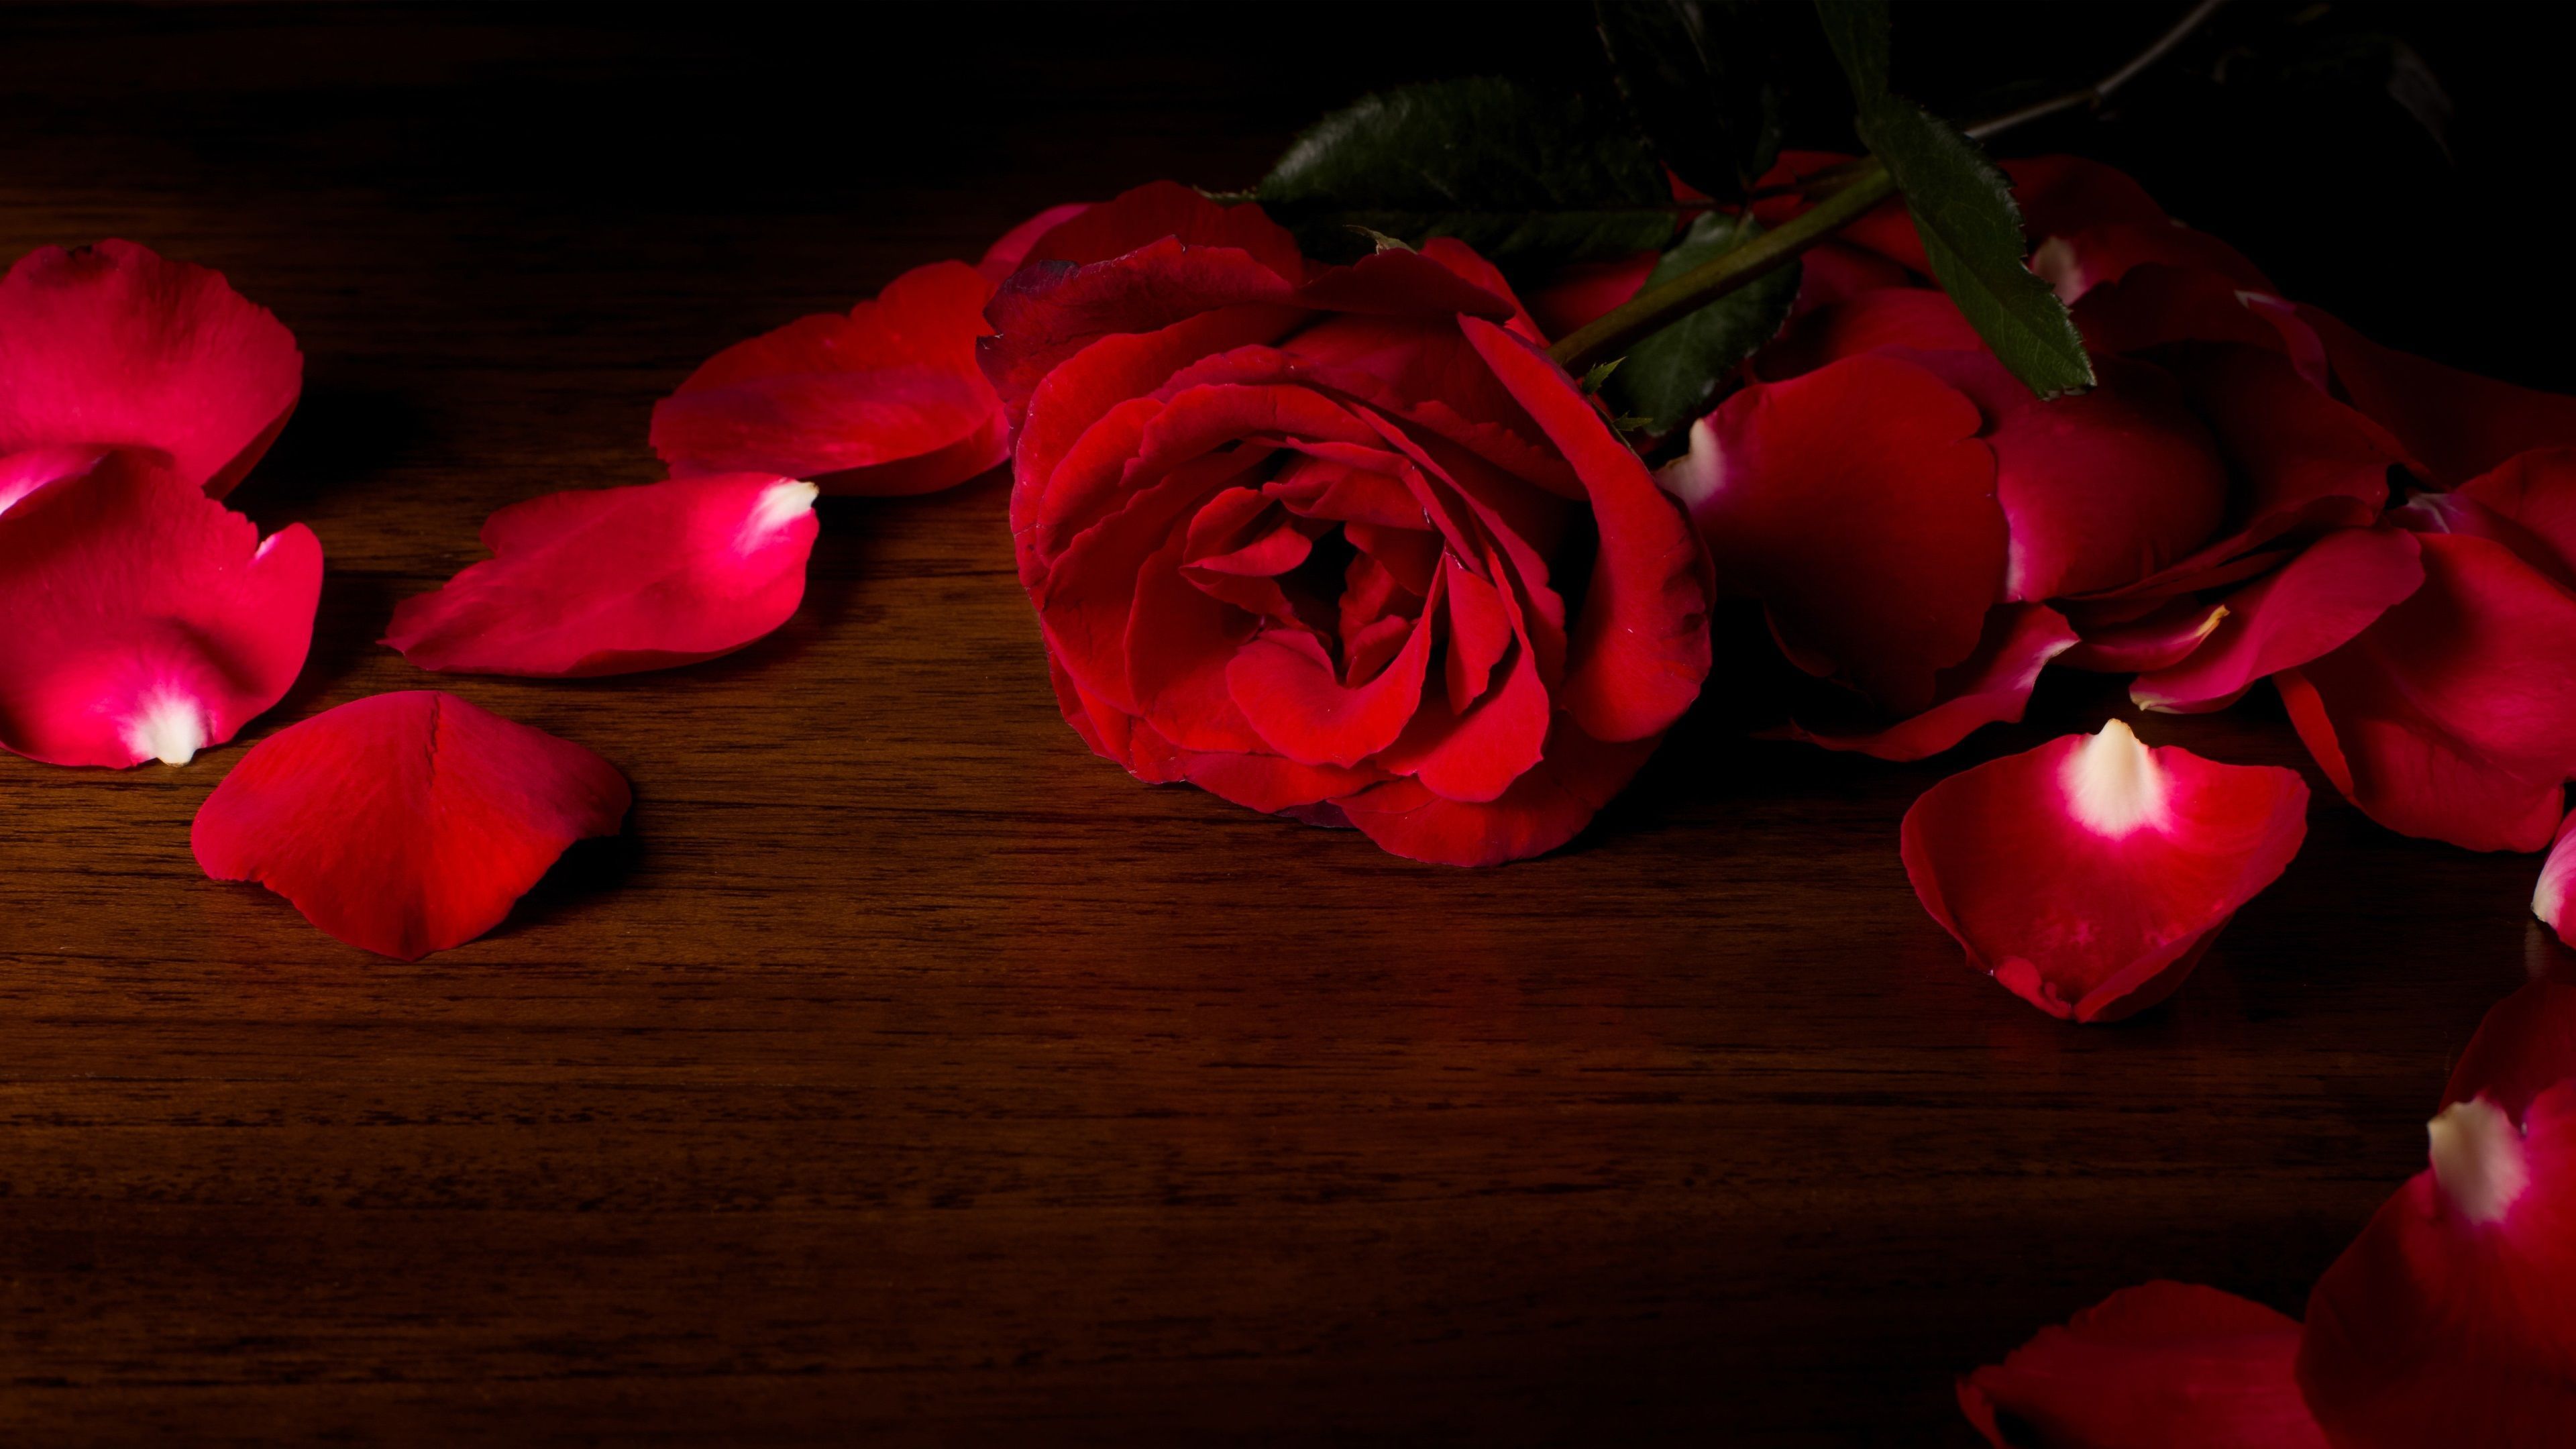 red roses 4k image background. Red roses wallpaper, Rose wallpaper, Flowers